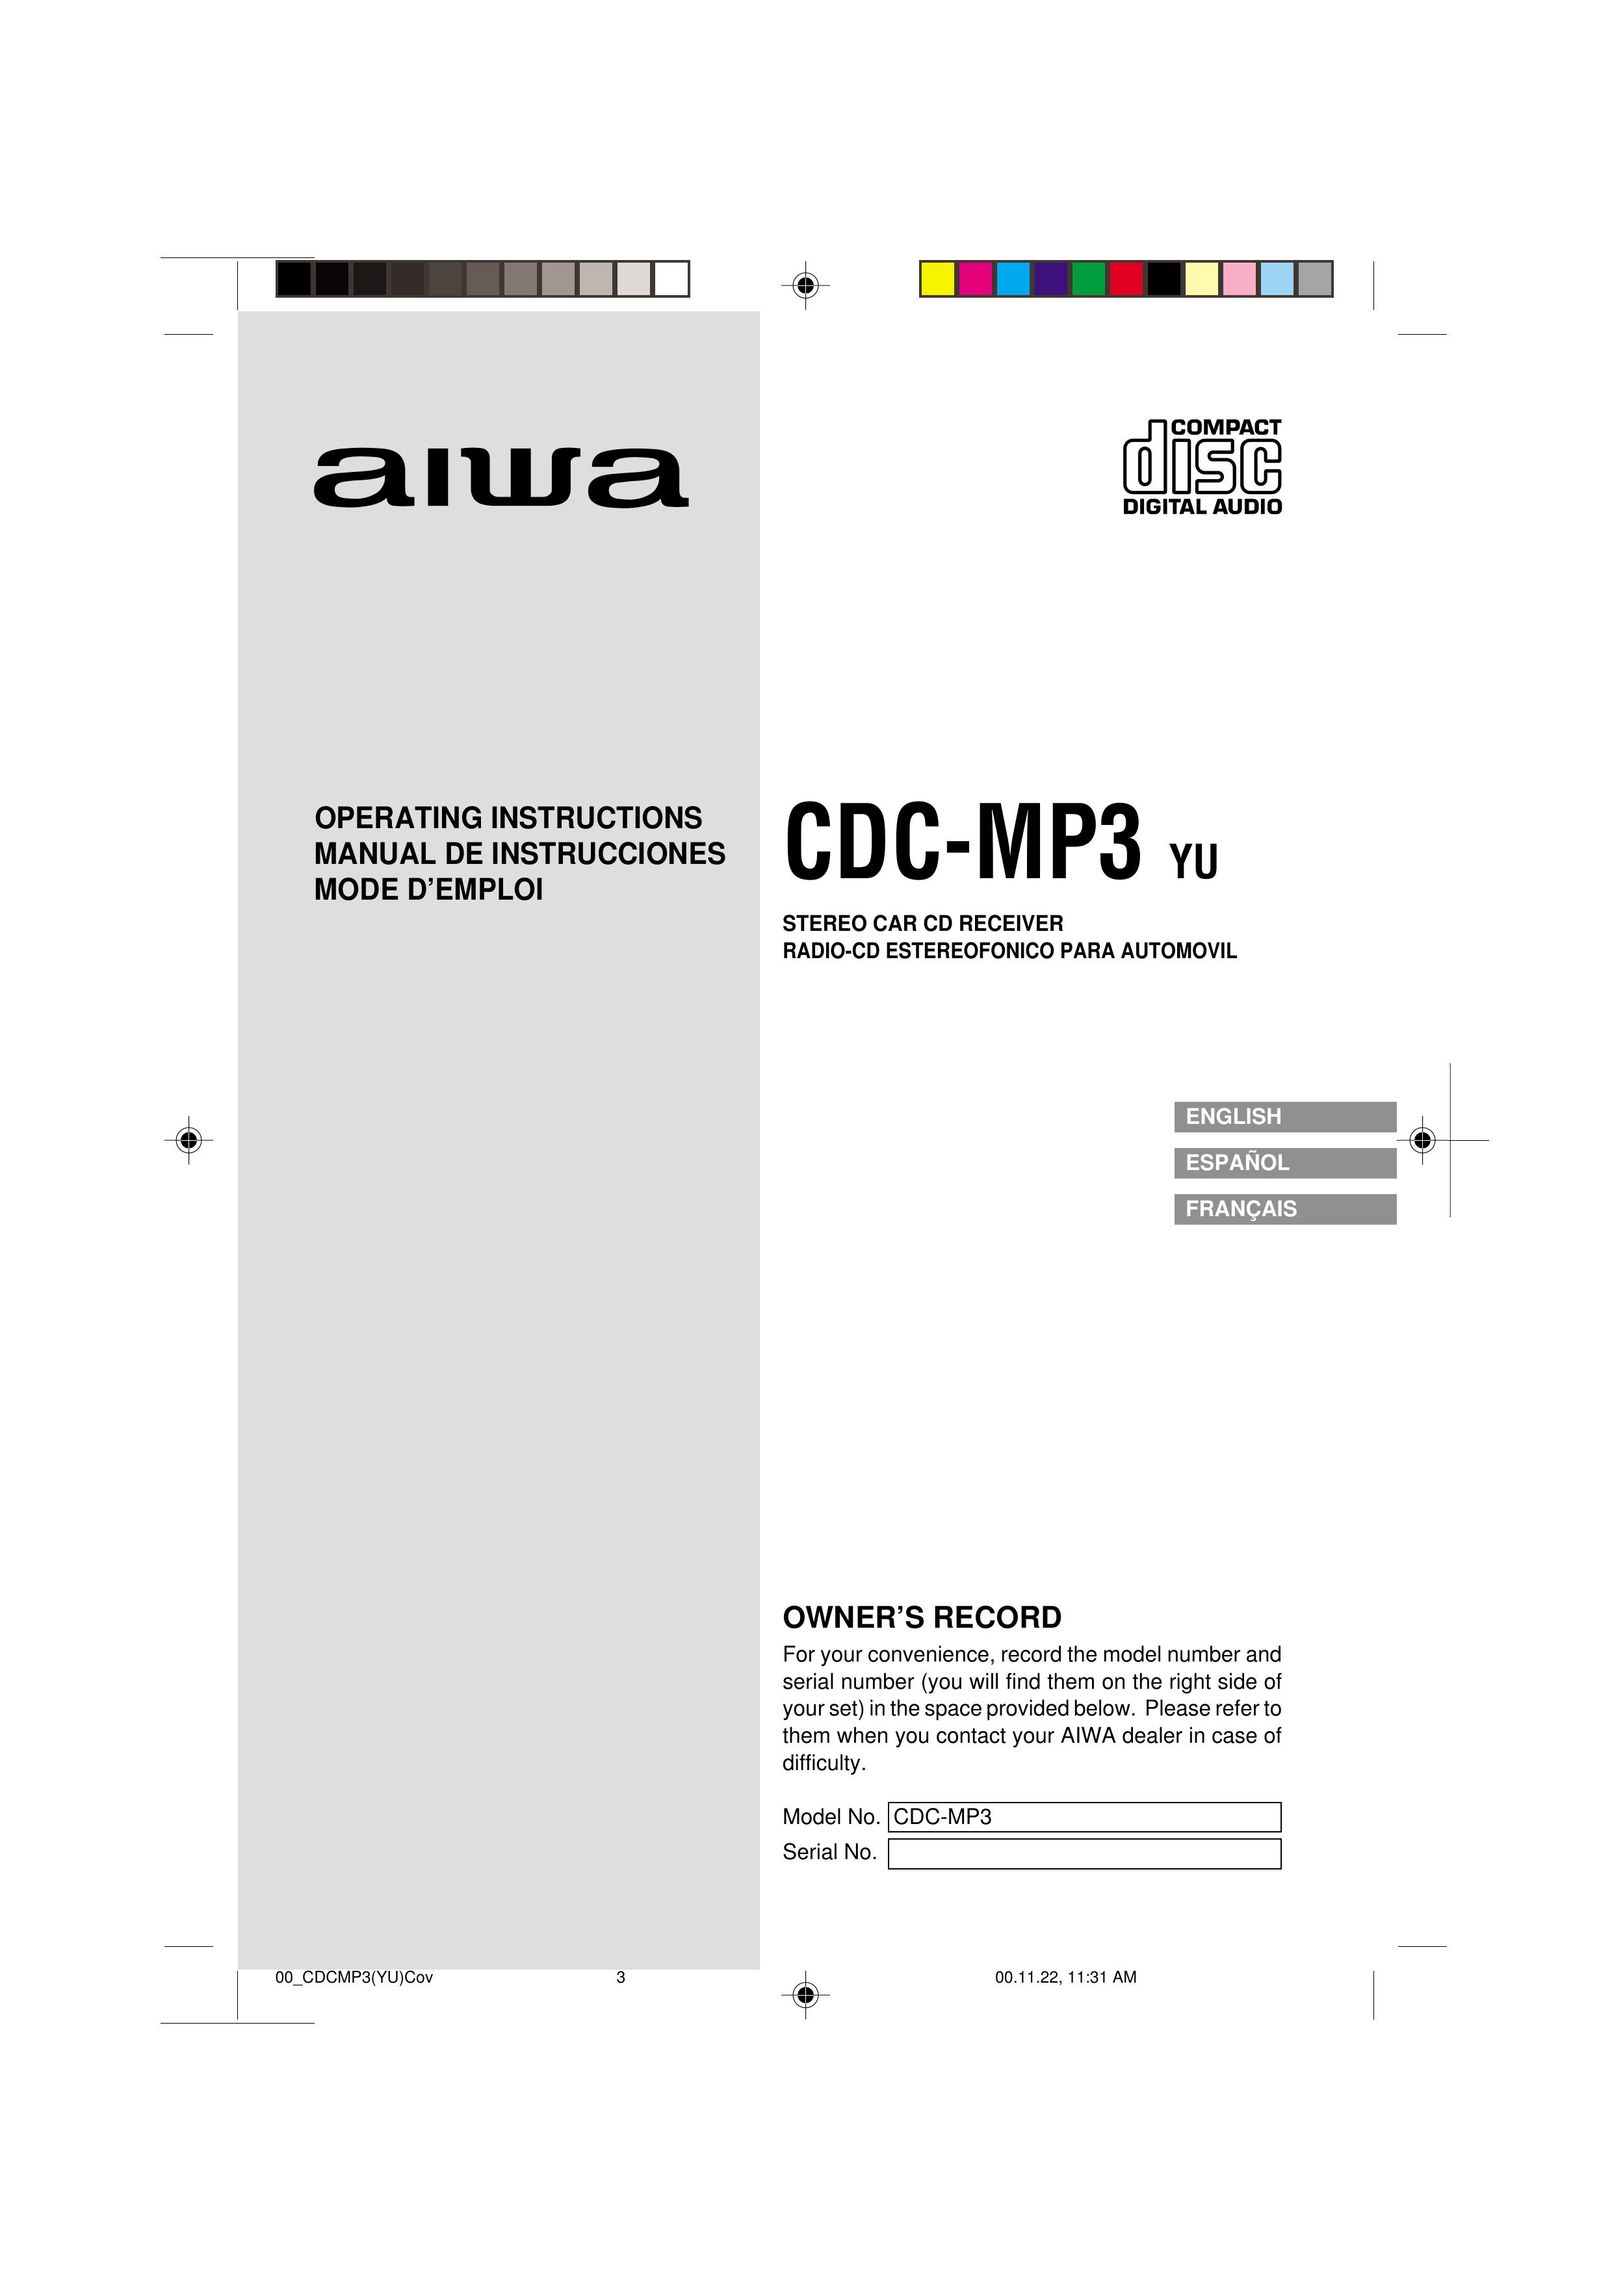 Aiwa CDC-MP3 YU Car Stereo System User Manual